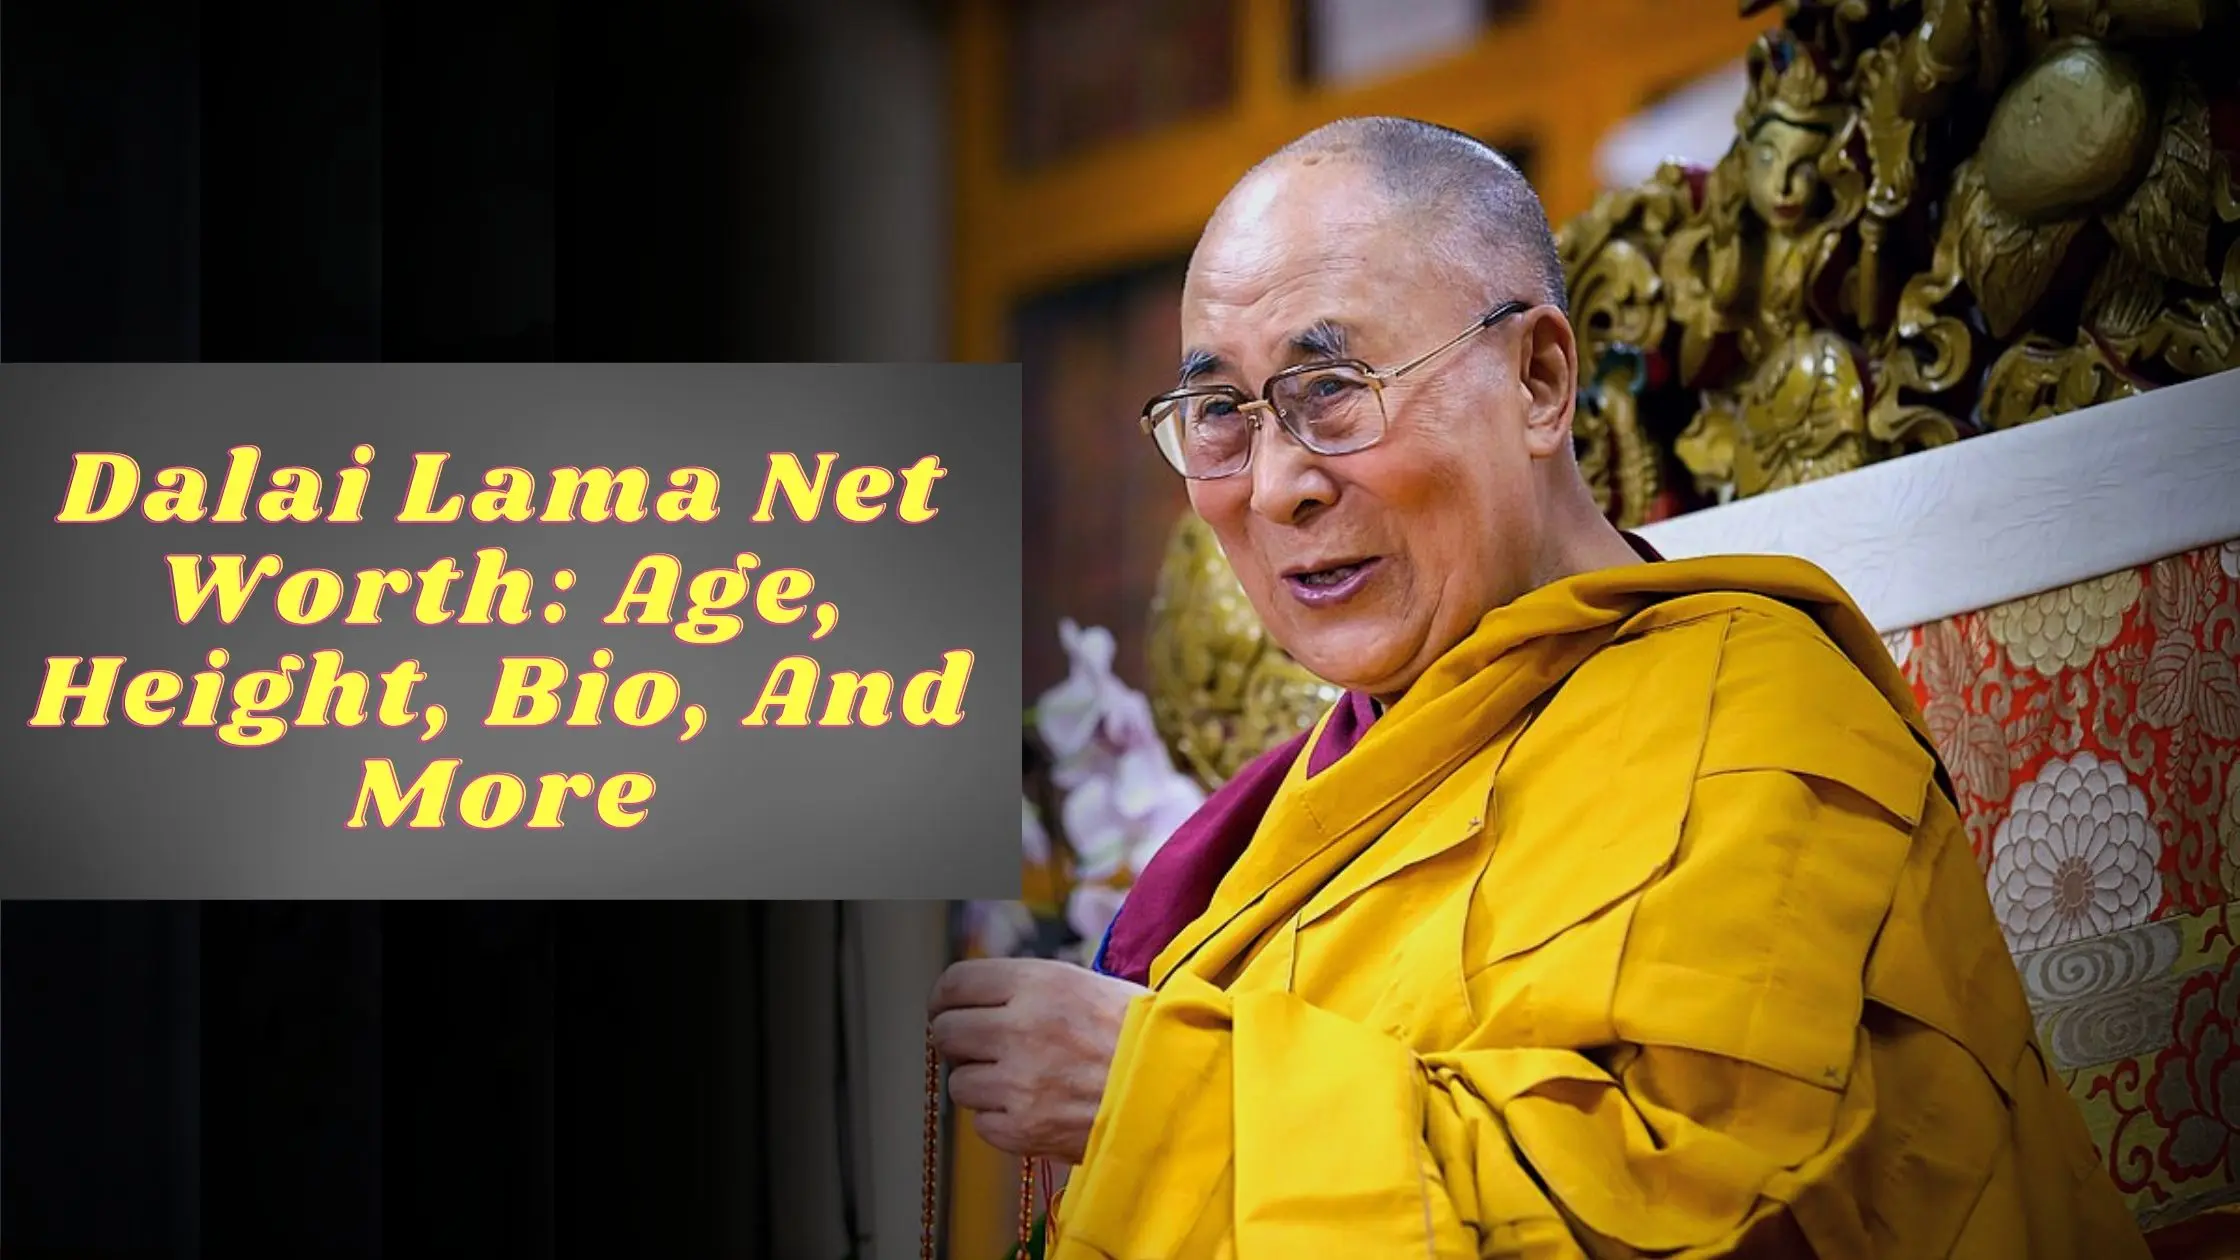 Dalai Lama Net Worth Age, Height, Bio, And More